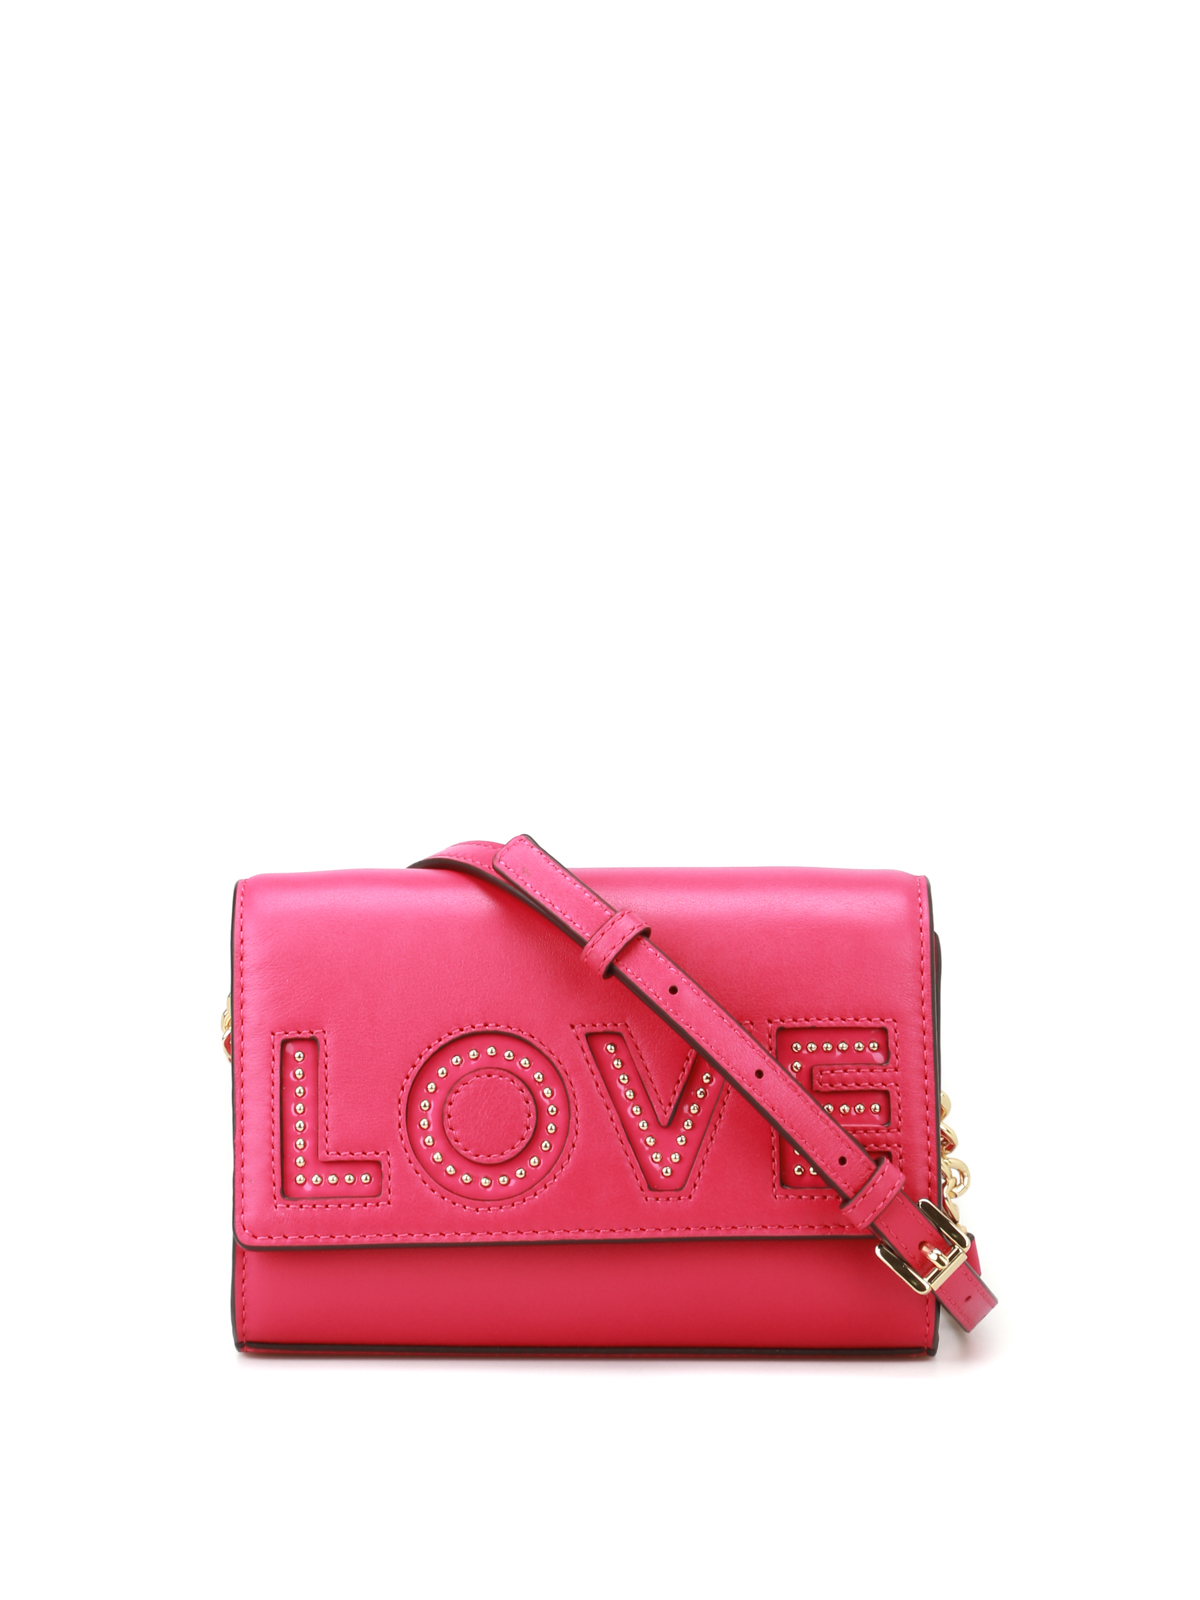 michael kors pink love purse